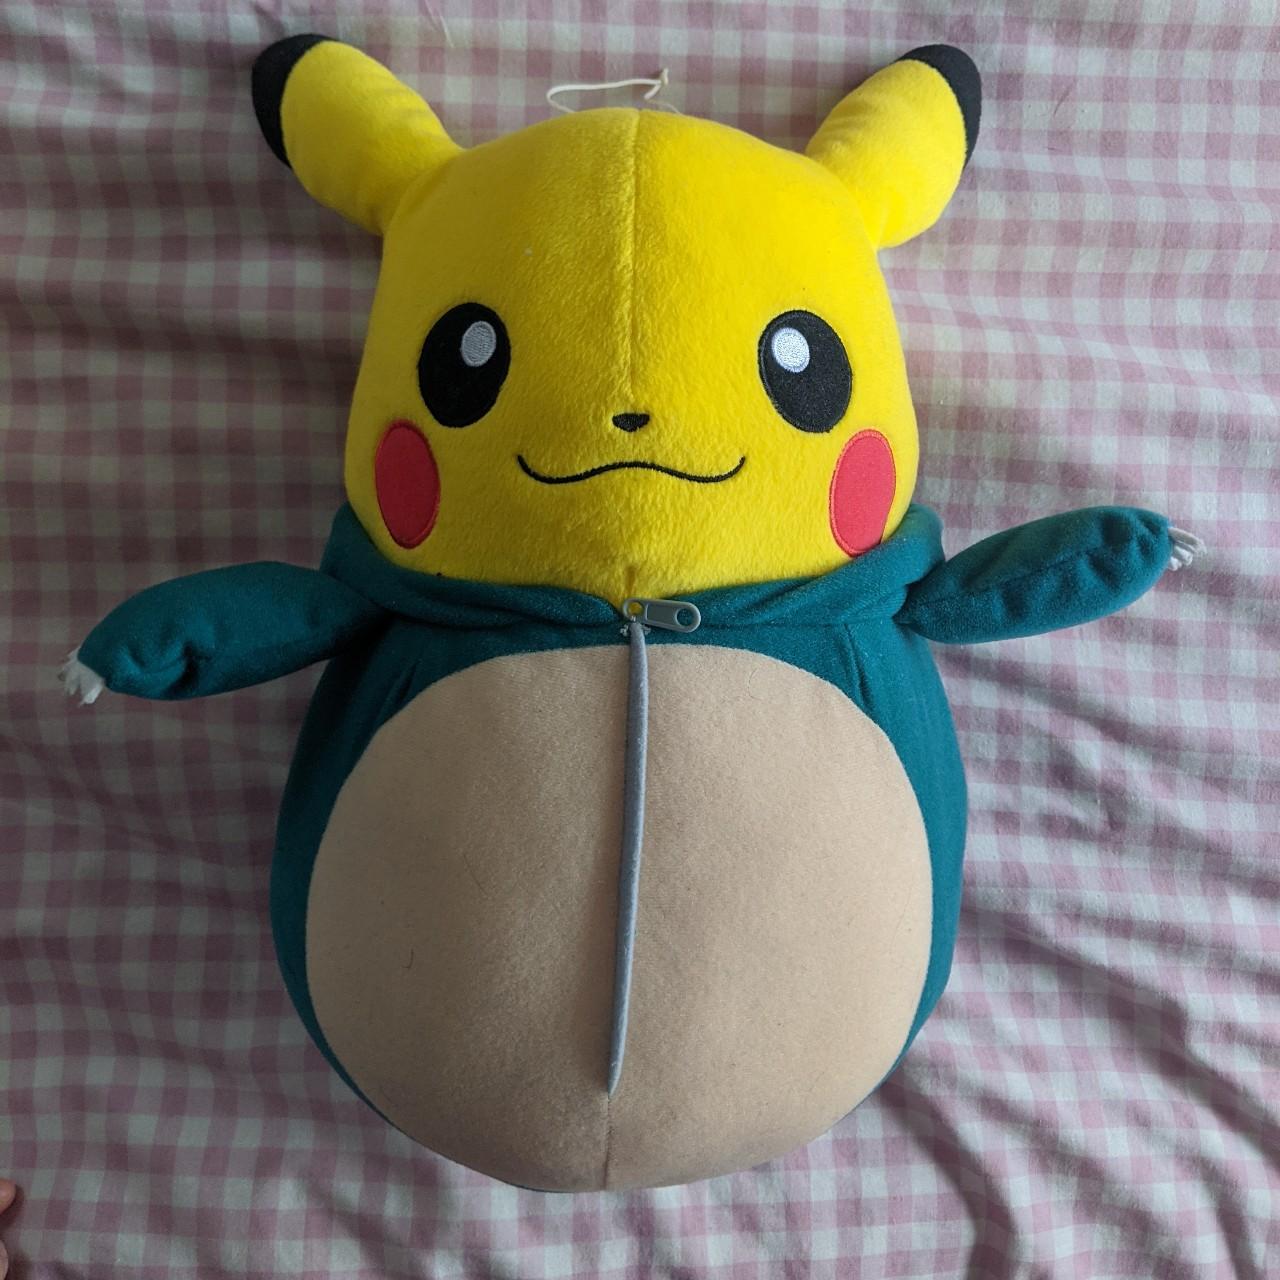 snorlax and pikachu